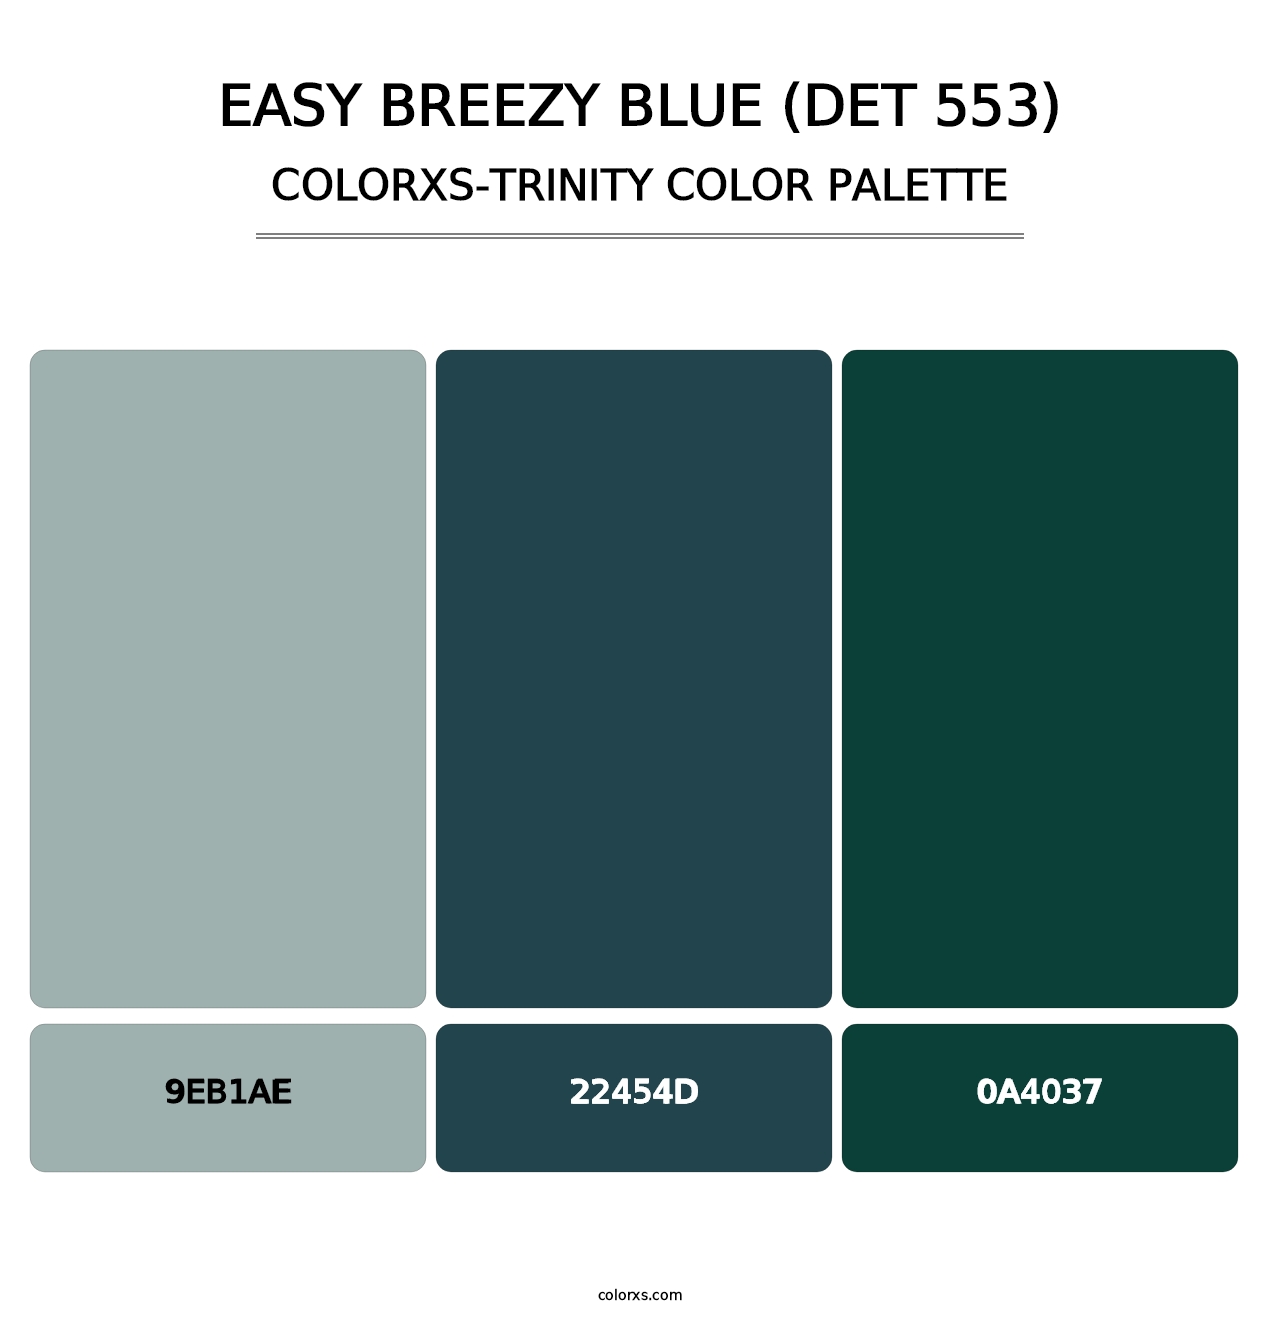 Easy Breezy Blue (DET 553) - Colorxs Trinity Palette